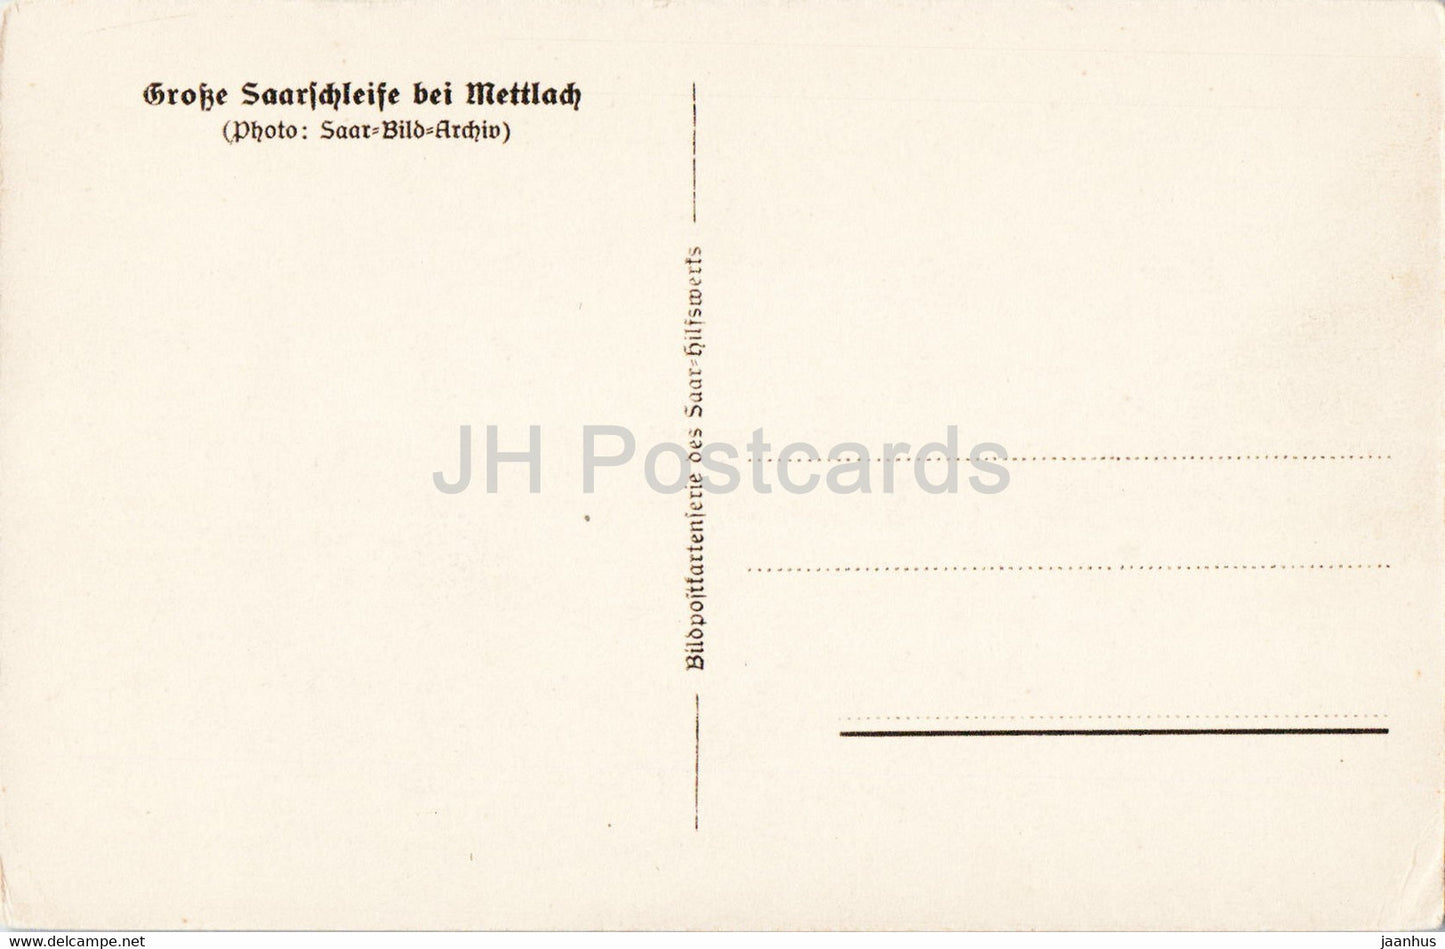 Grosse Saarschleife bei Mettlach - carte postale ancienne - Allemagne - inutilisée